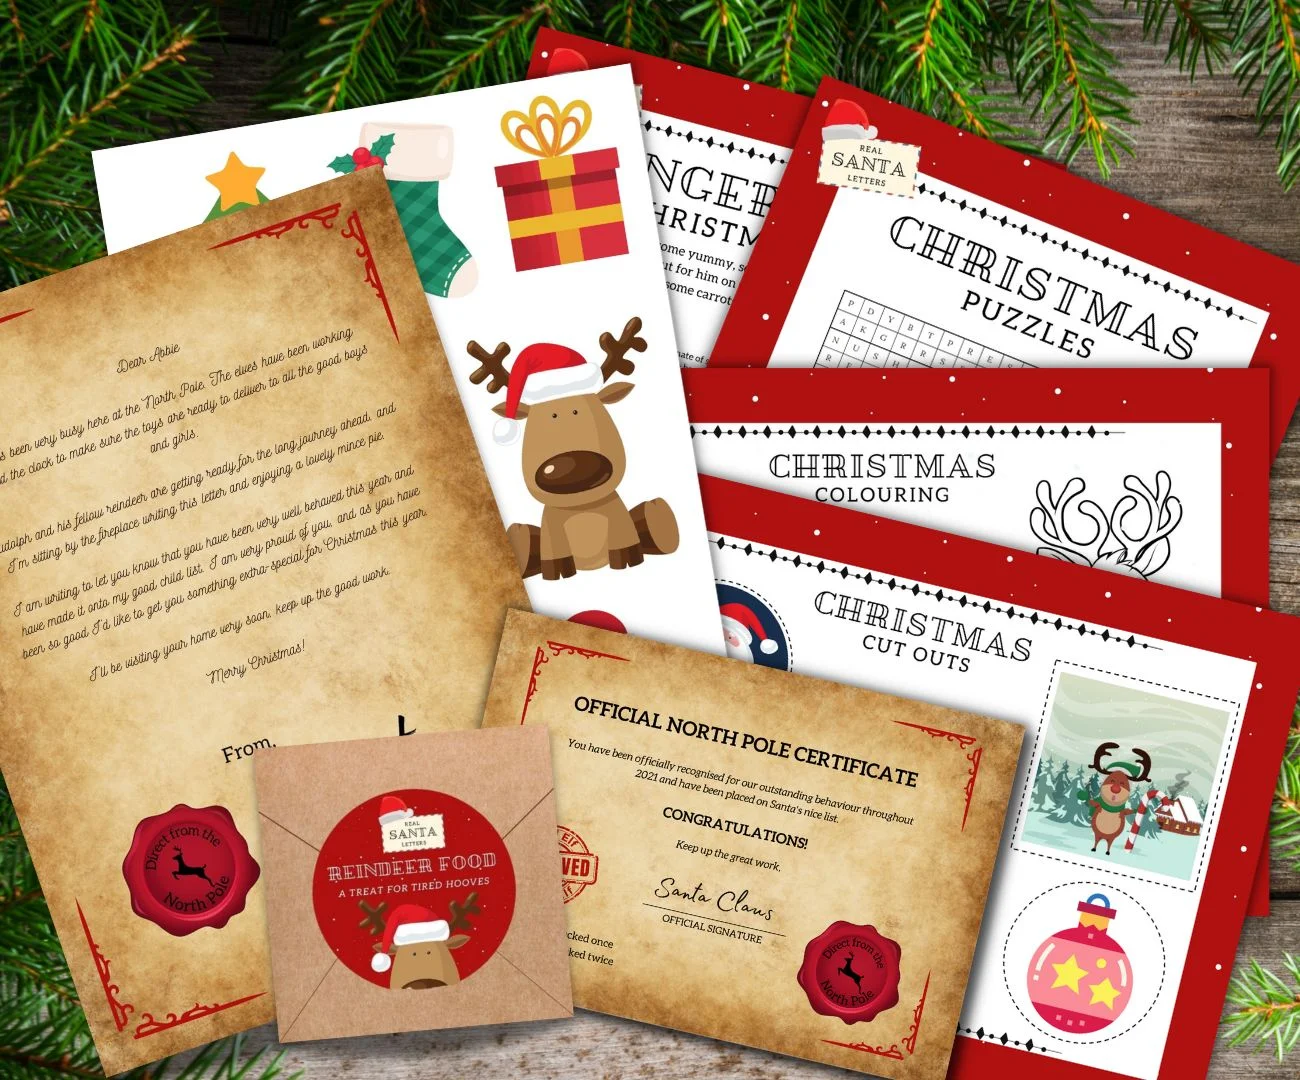 Personalised Santa Letter, Certificate, Stickers, Reindeer Food & Activity Sheets